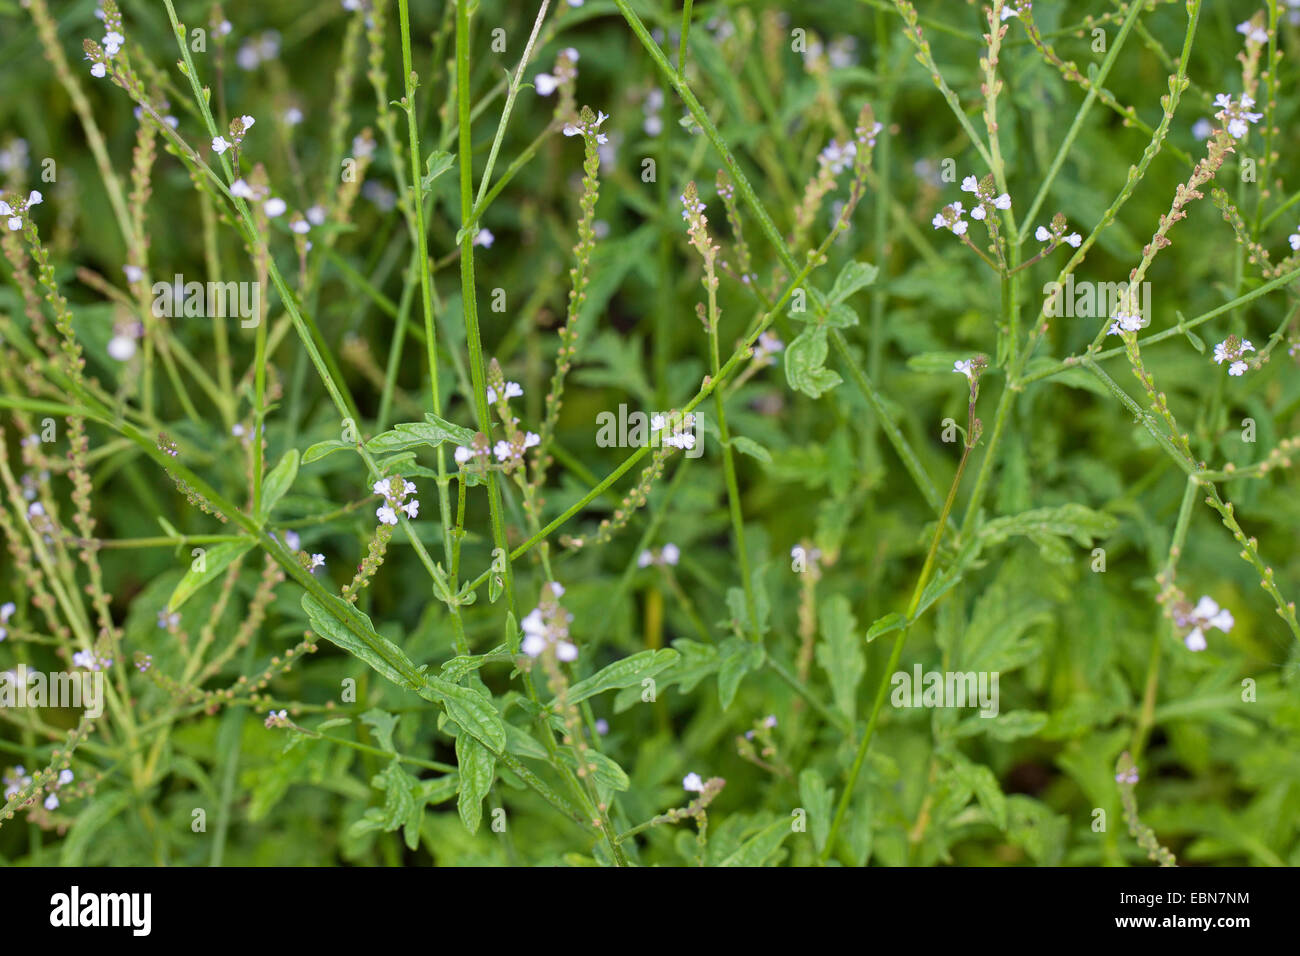 European vervain, Turkey Grass, Simpler's Joy (Verbena officinalis), blooming, Germany Stock Photo